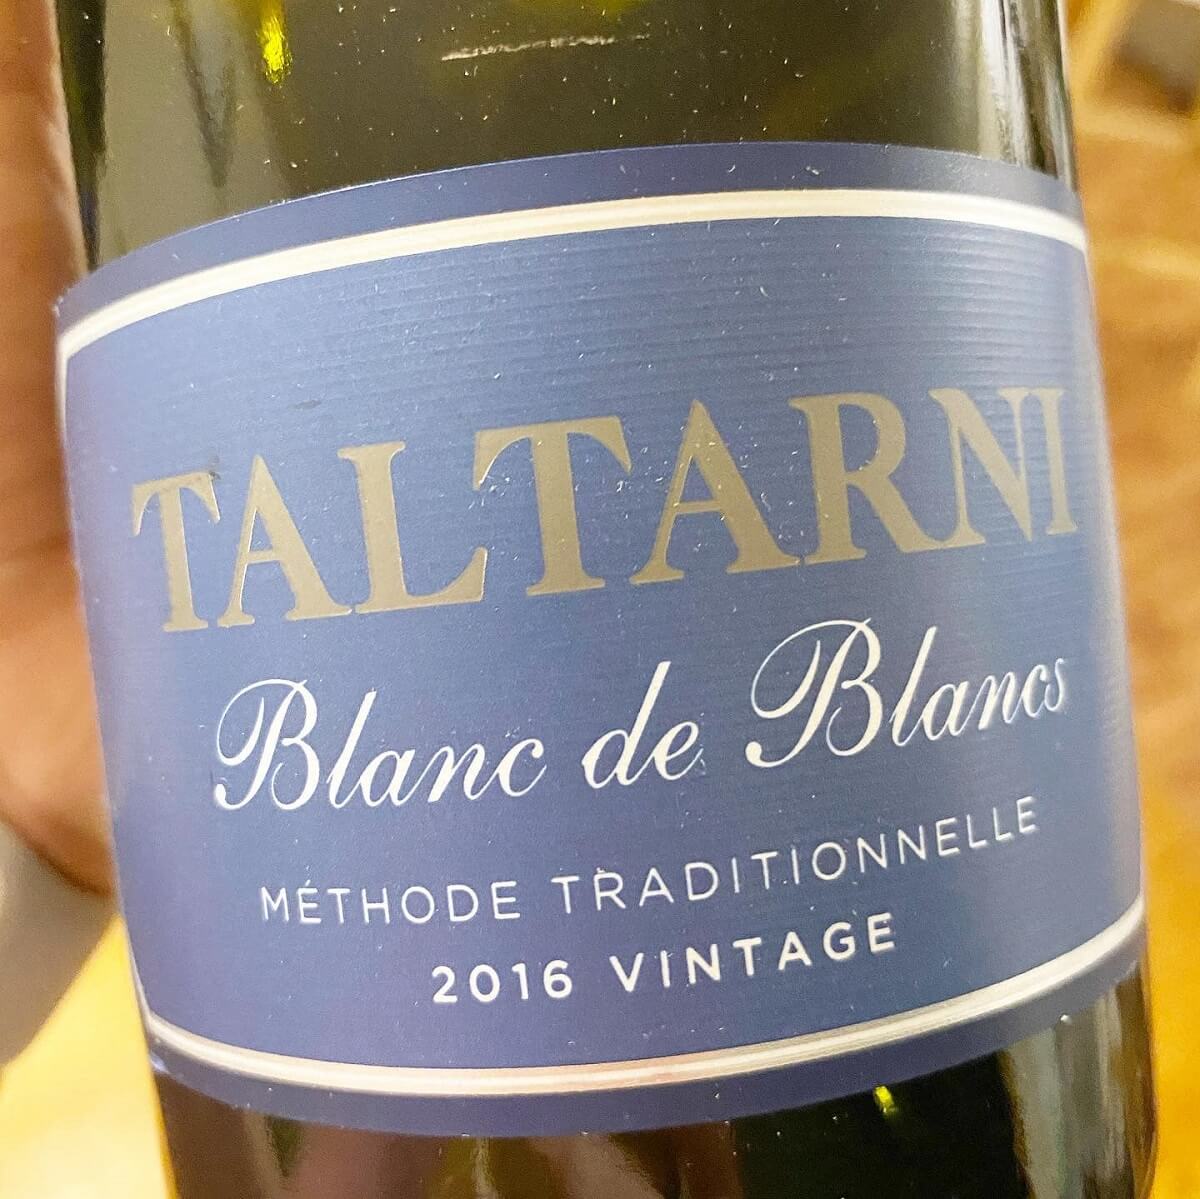 Taltarni Blanc de Blancs 2016 Vintage